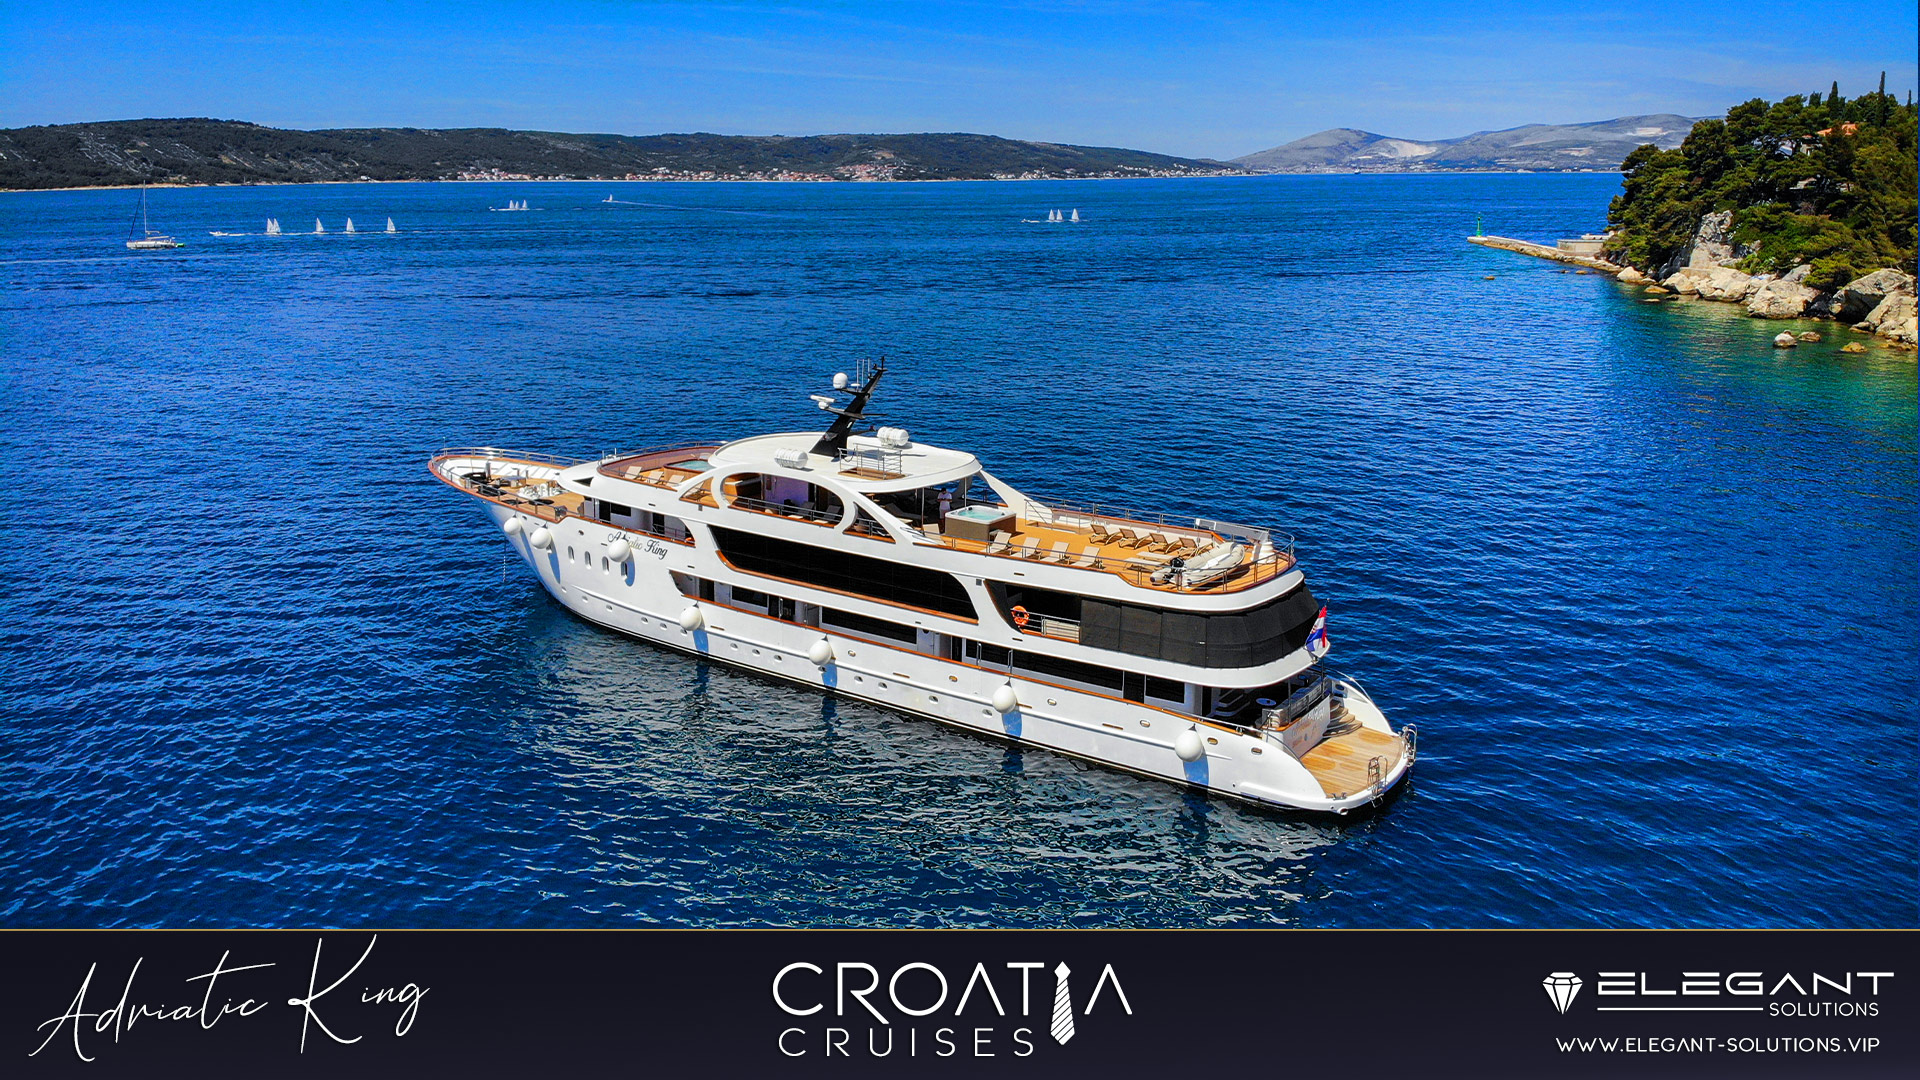 Adriatic King Croatia Cruises